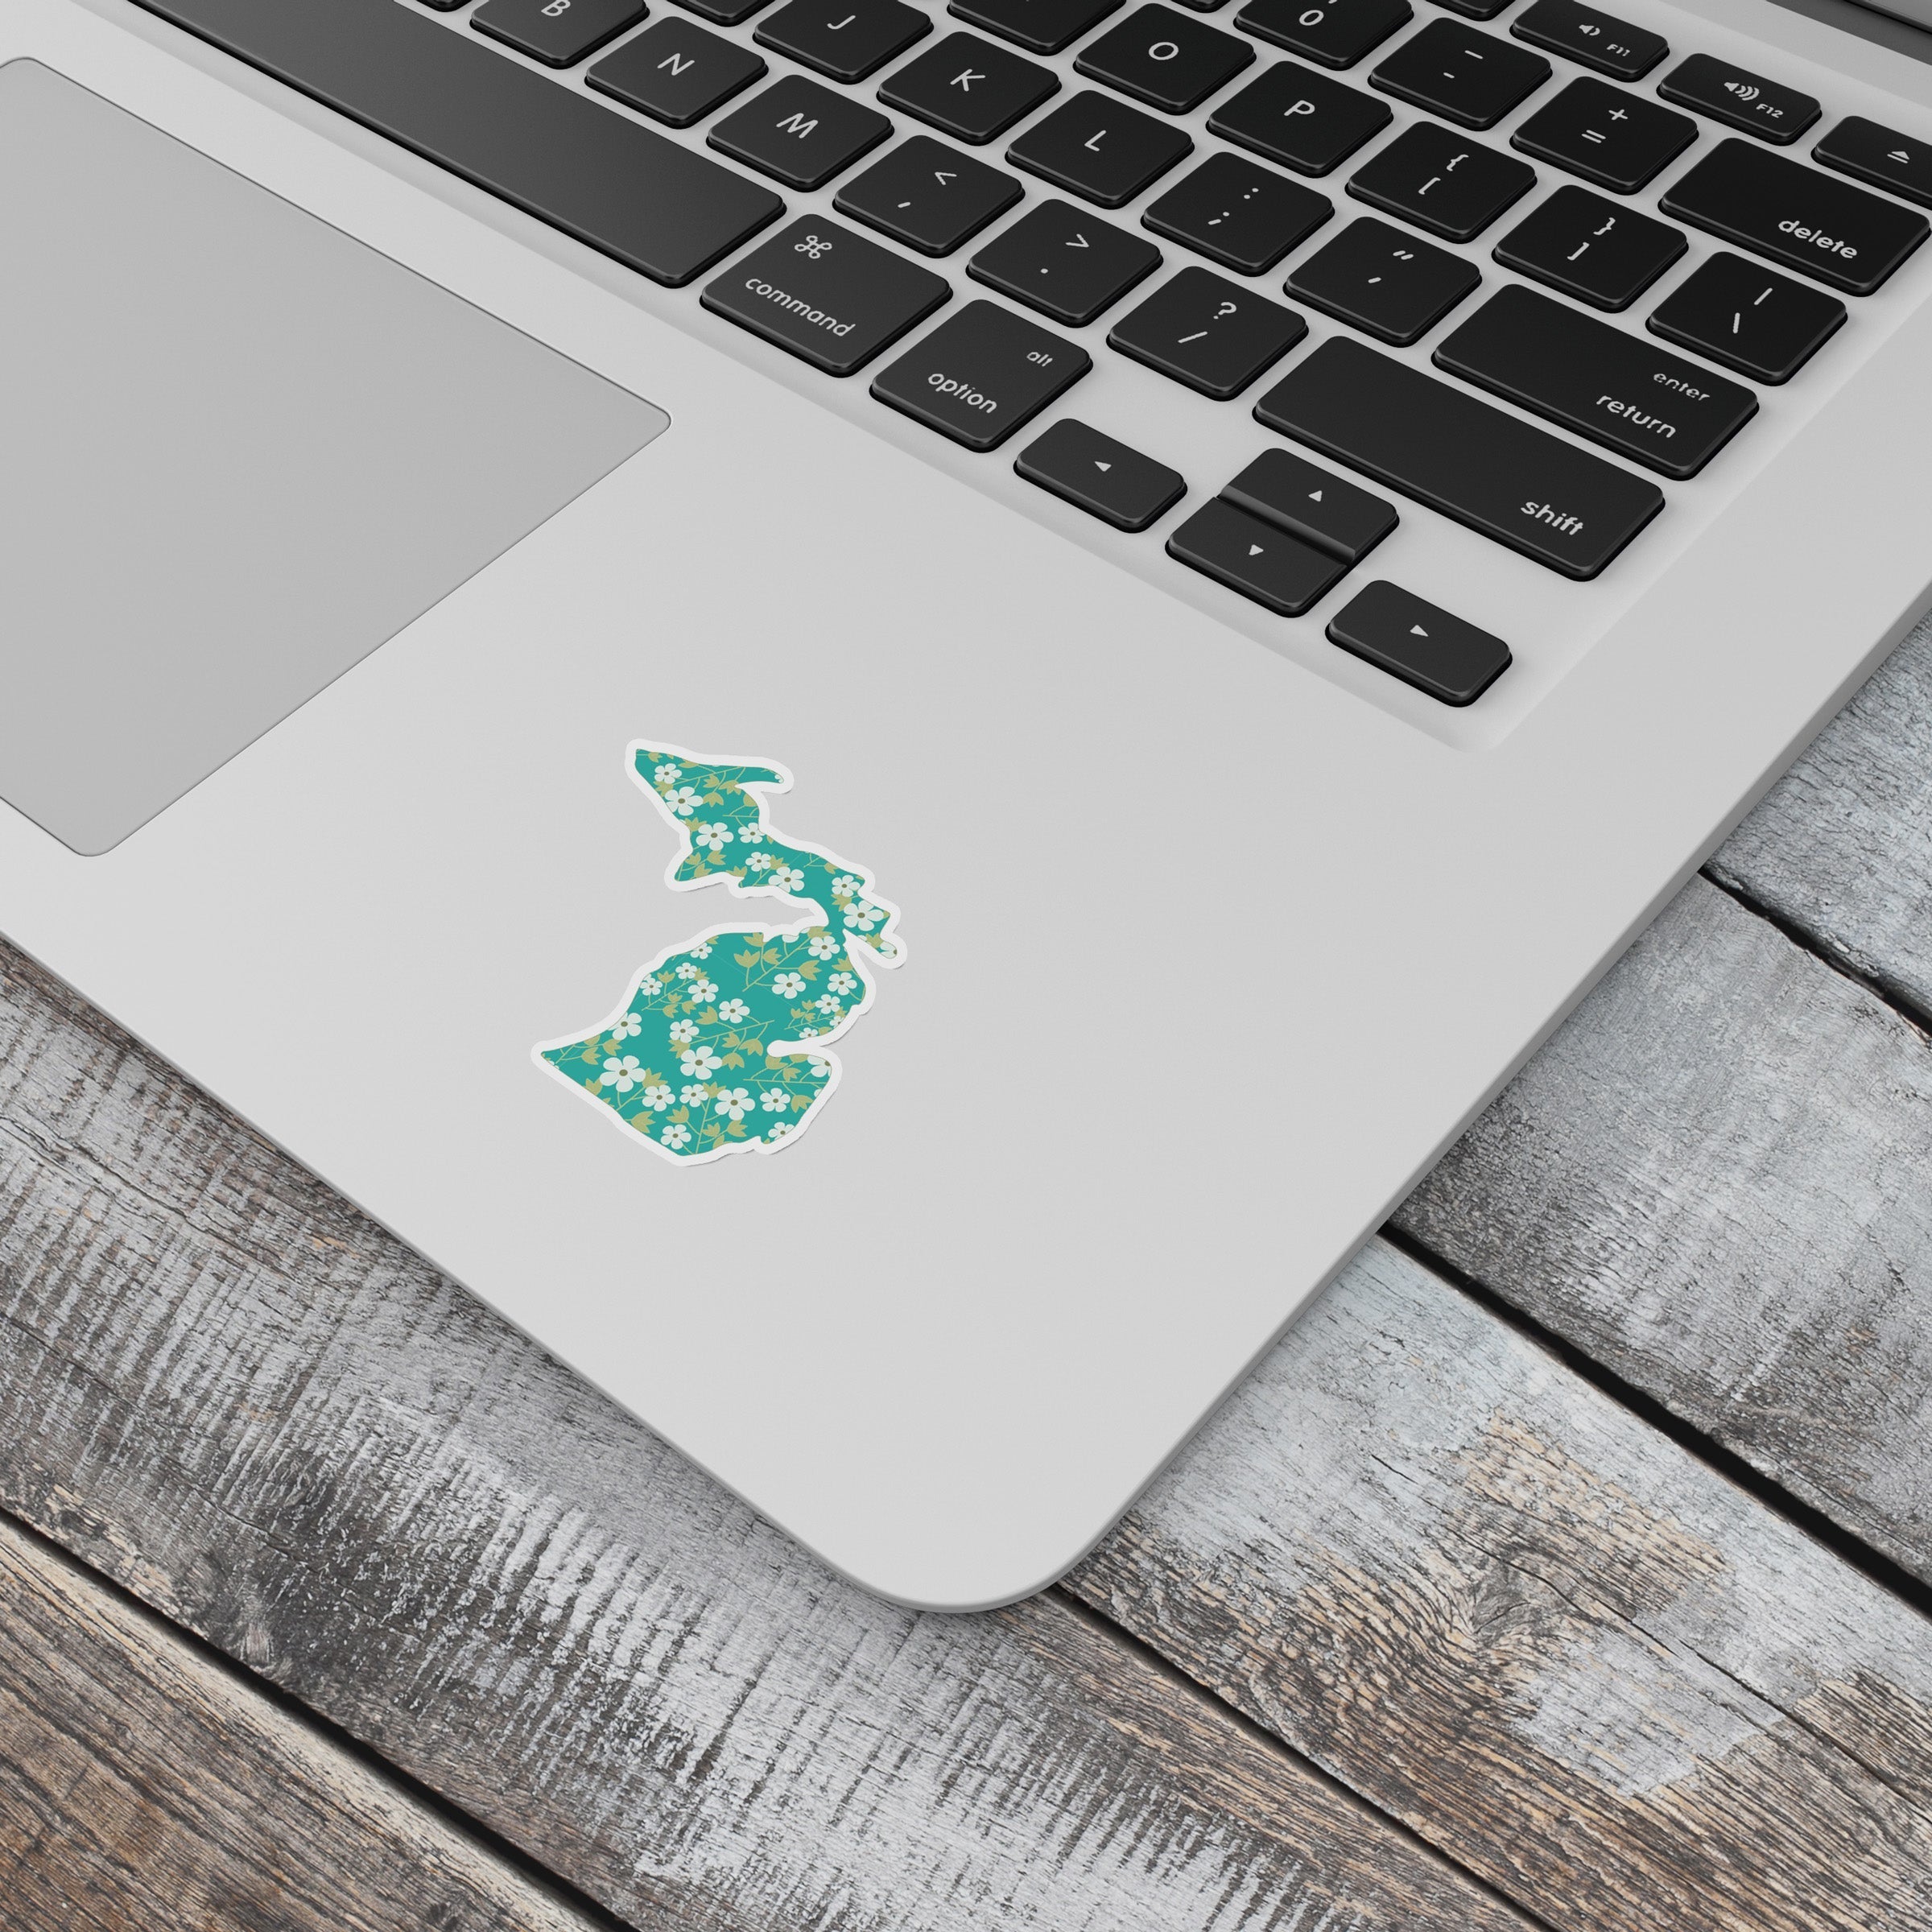 Apple Blossom - Green - Michigan Waterproof Sticker (3" X 3")